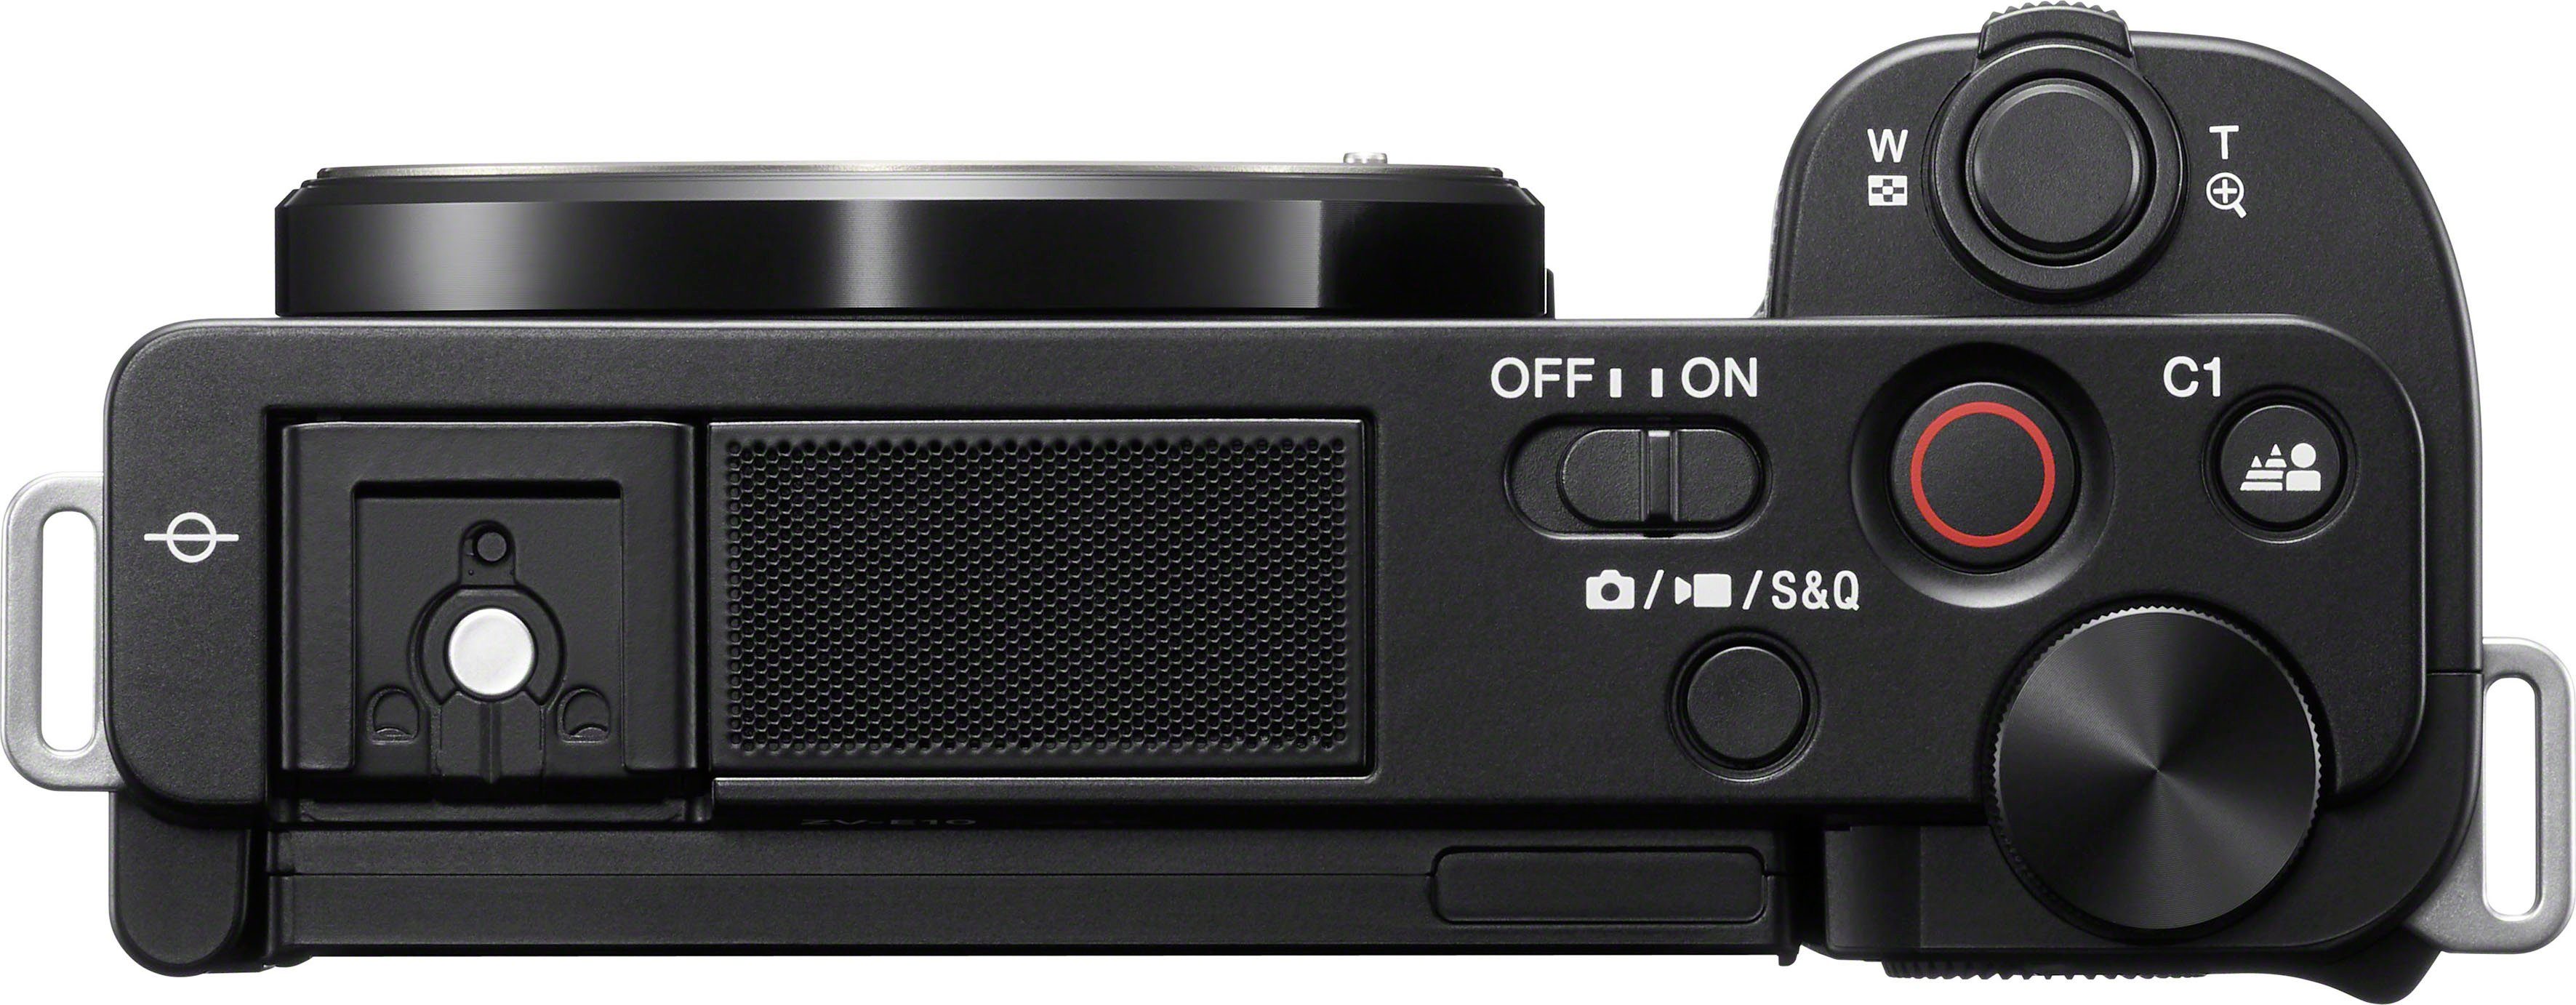 schwenkbarem (SELP1650), ZV-E10L - Bluetooth, SEL16-50 OSS 5.6 PZ MP, 16 mit Display 24,2 - inkl. Objektiv) (WiFi), Vlog-Kamera Systemkamera Sony mm F3.5 50 WLAN (E